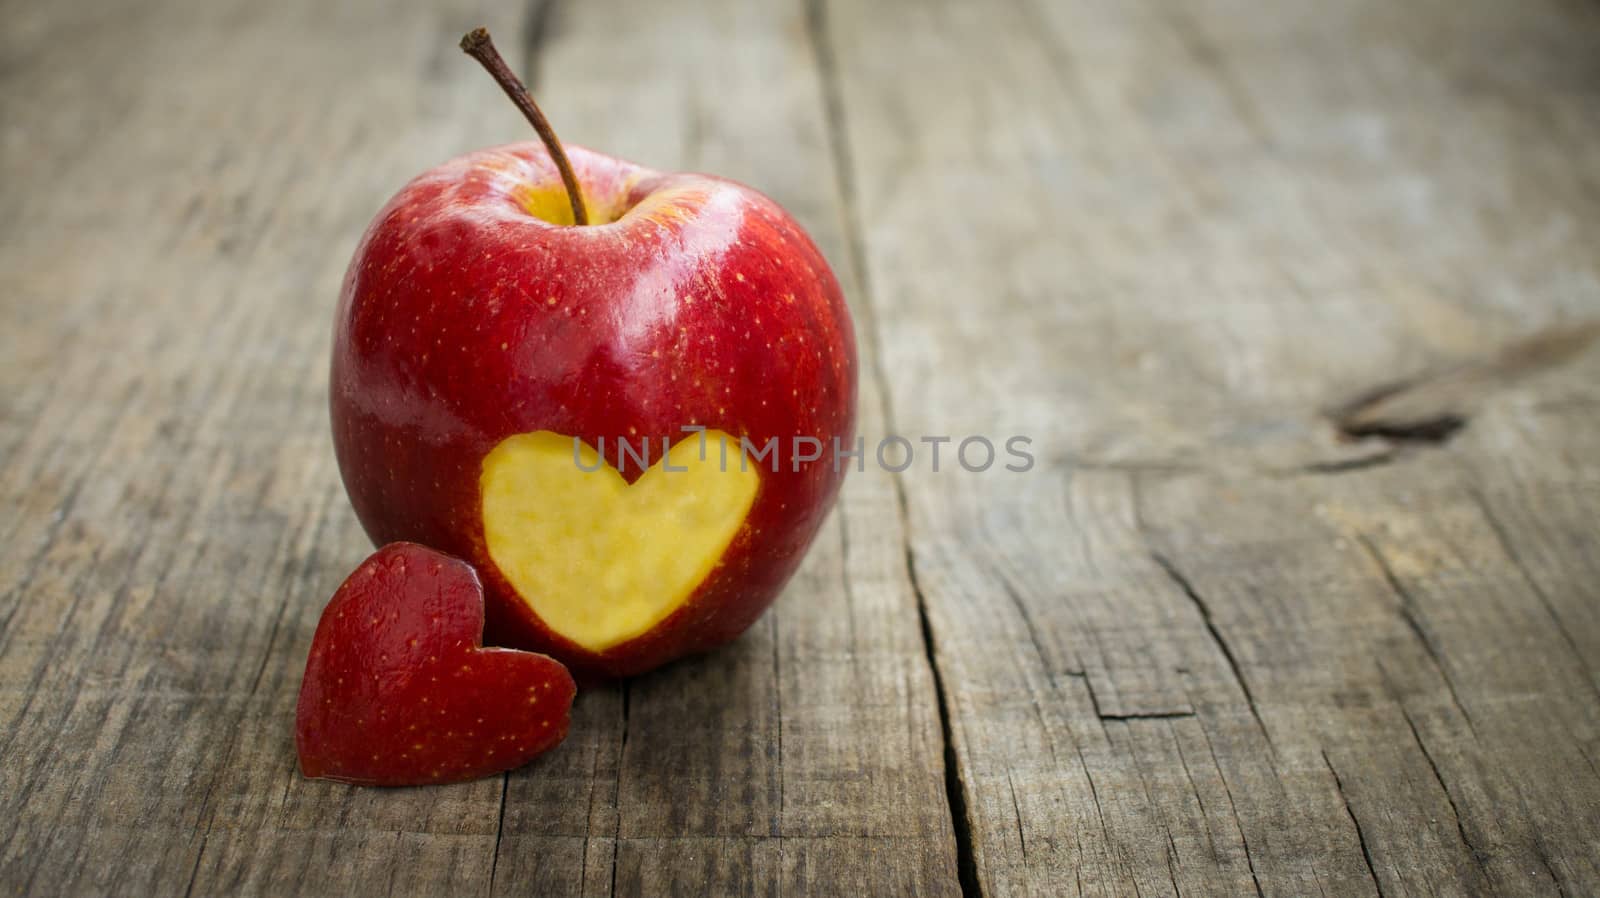 Apple with engraved heart by kbuntu